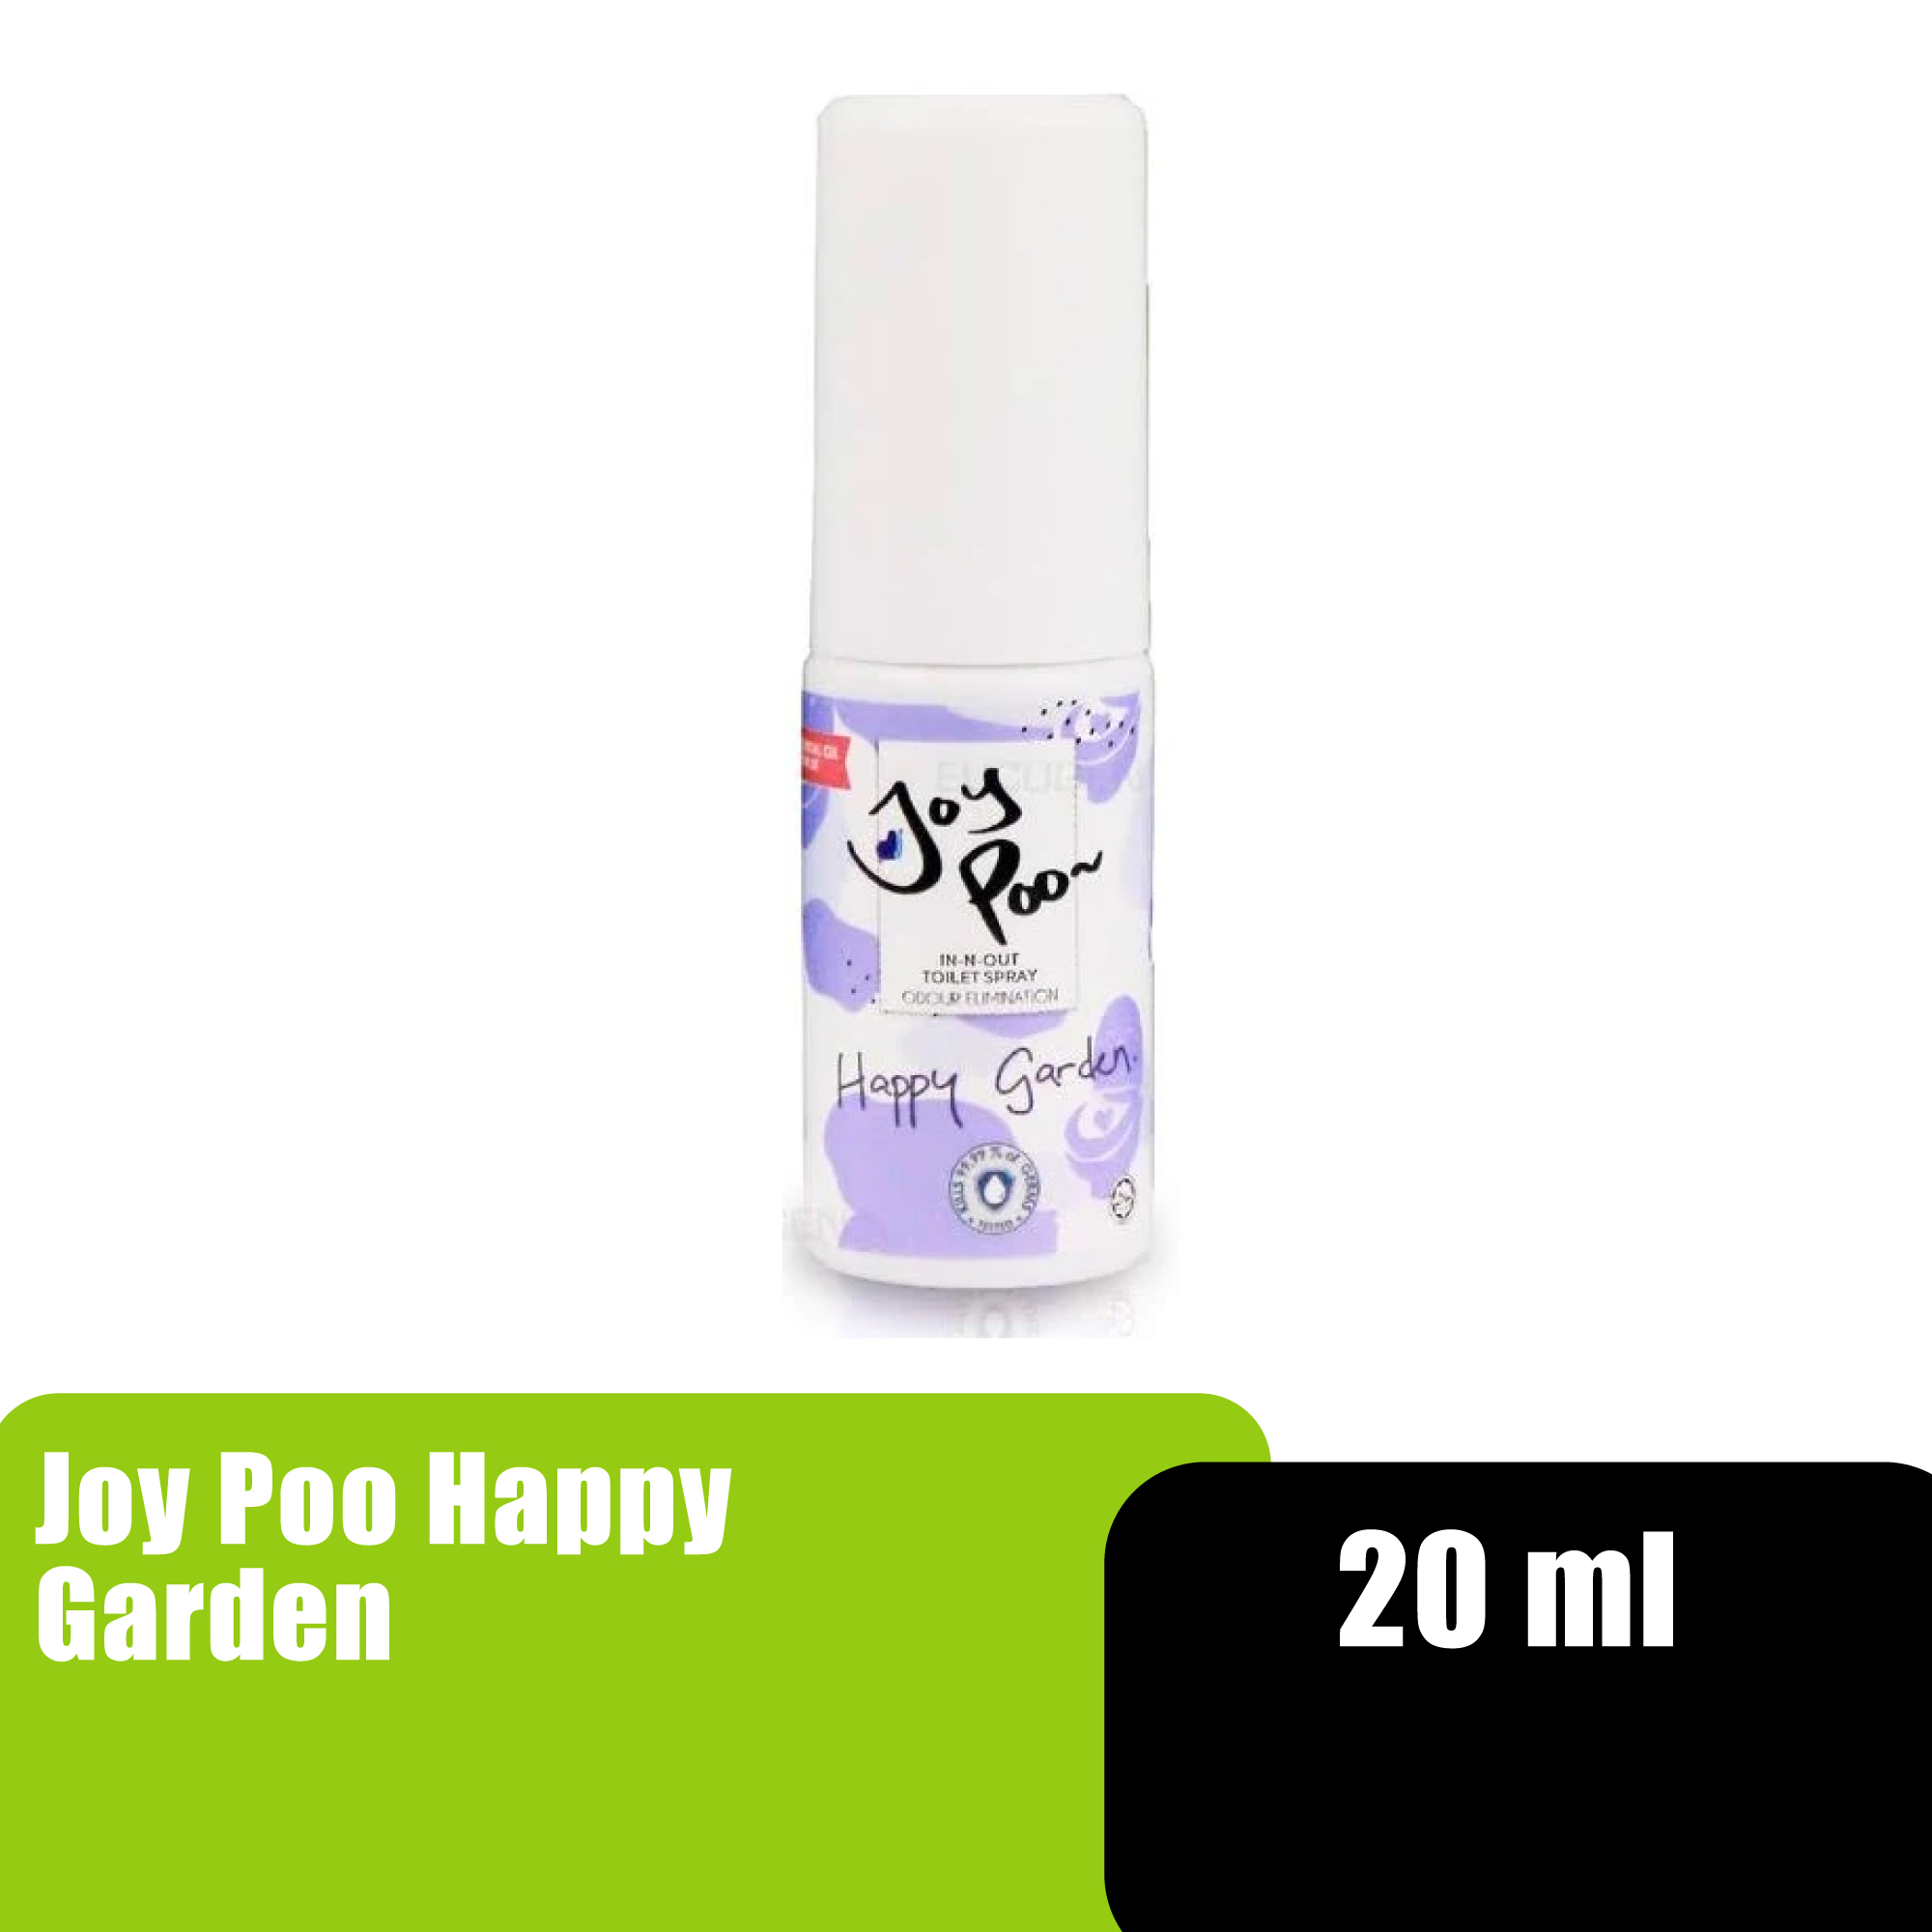 JOY POO 20ML - HAPPY GARDEN